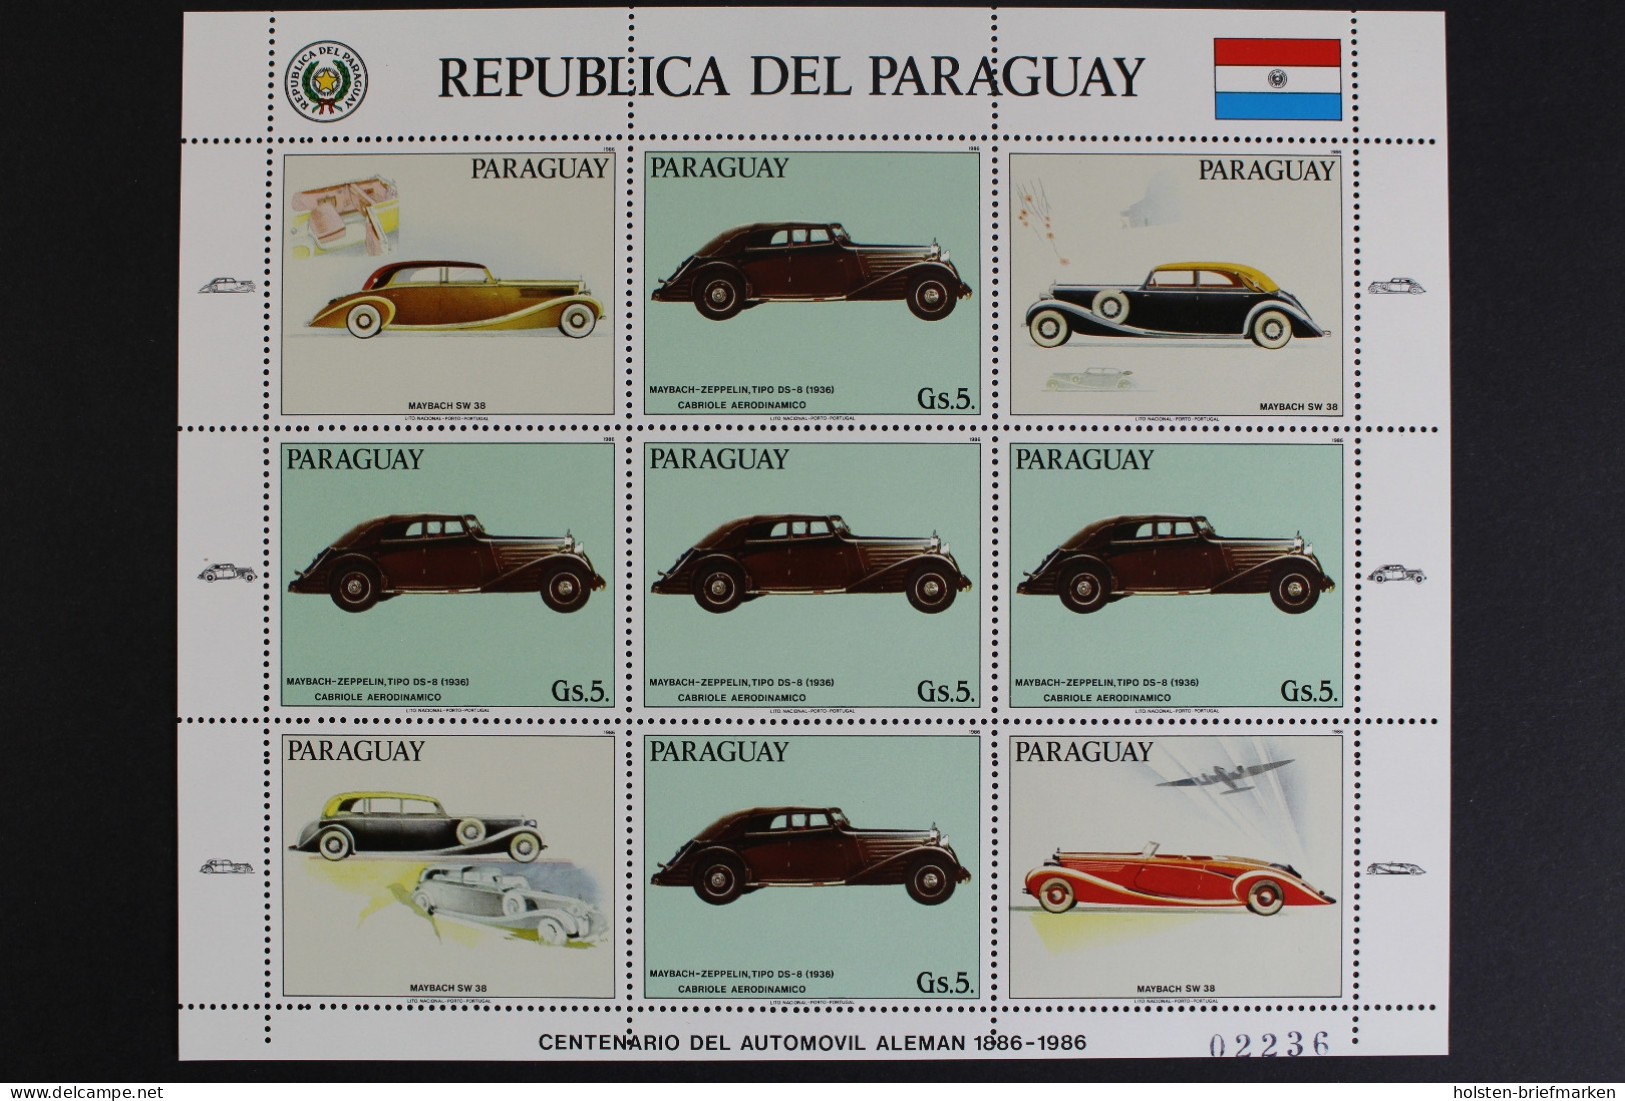 Paraguay, MiNr. 3993 KB, Postfrisch - Paraguay